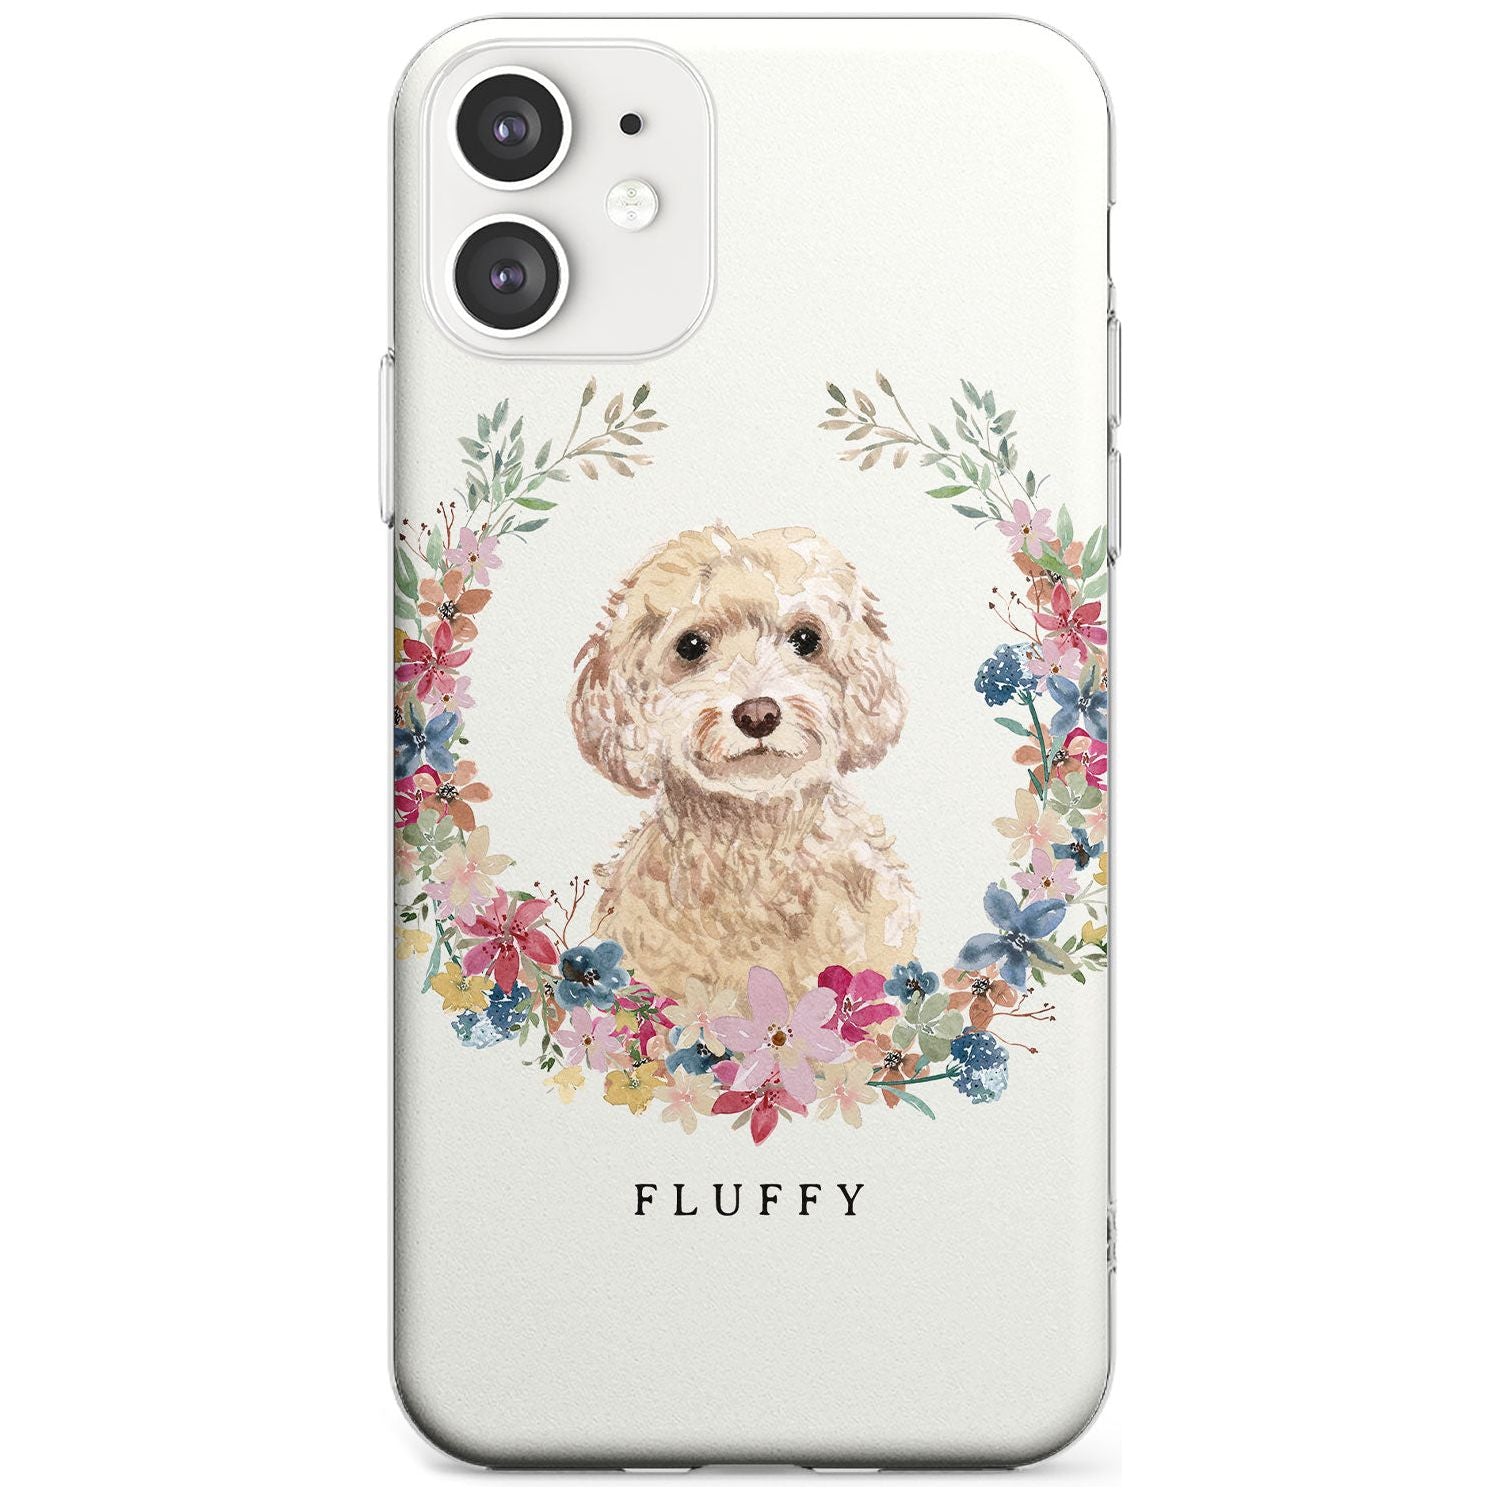 Champagne Cockapoo - Watercolour Dog Portrait Slim TPU Phone Case for iPhone 11